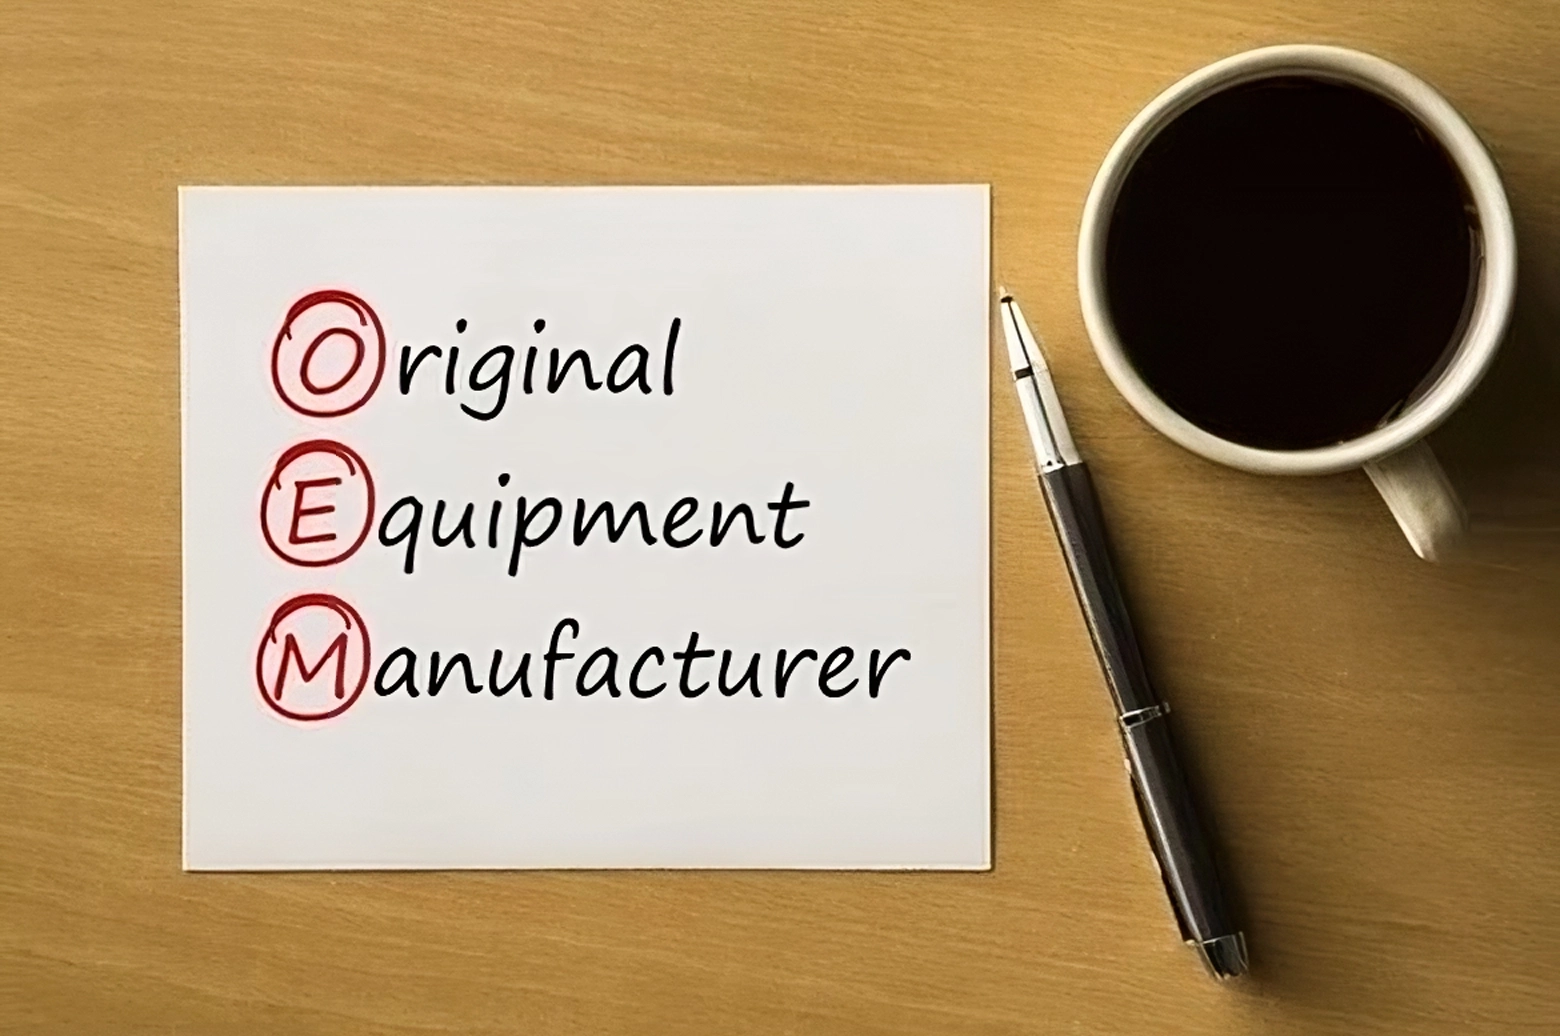 oem-original-equipment-manufacturer-handwriting-260nw-457692244-transformed